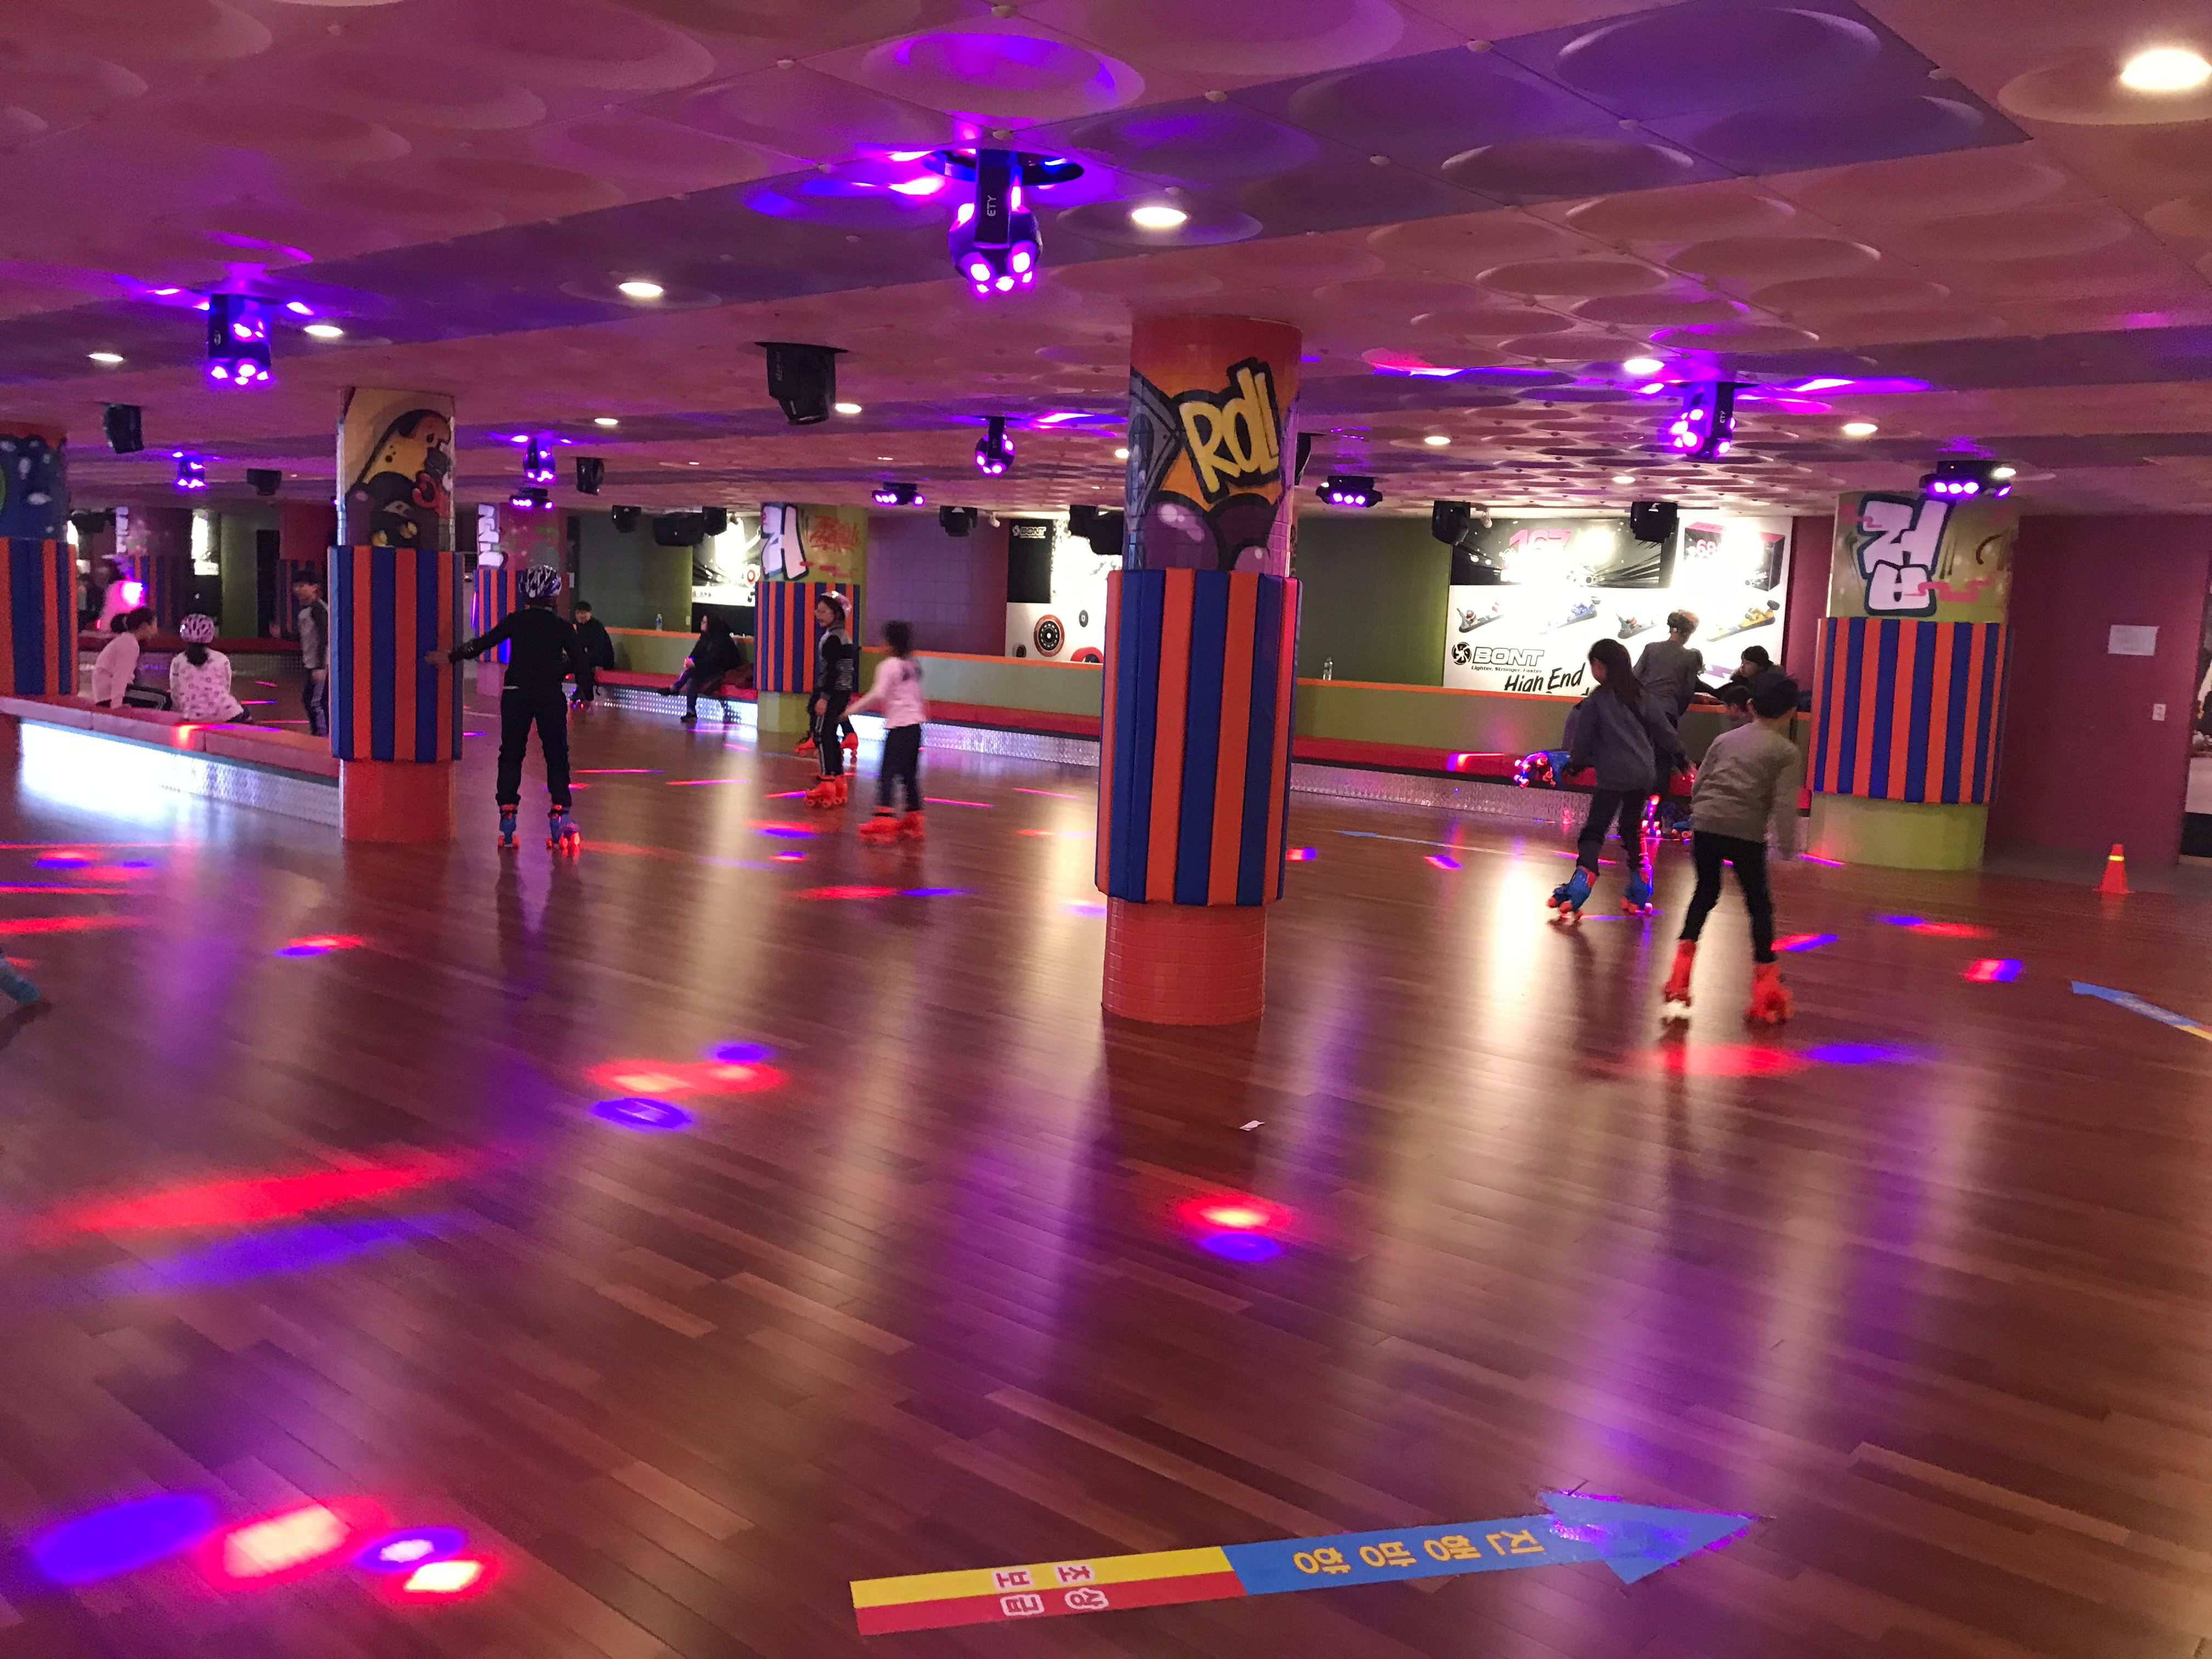 Indoor playground roller skating rink